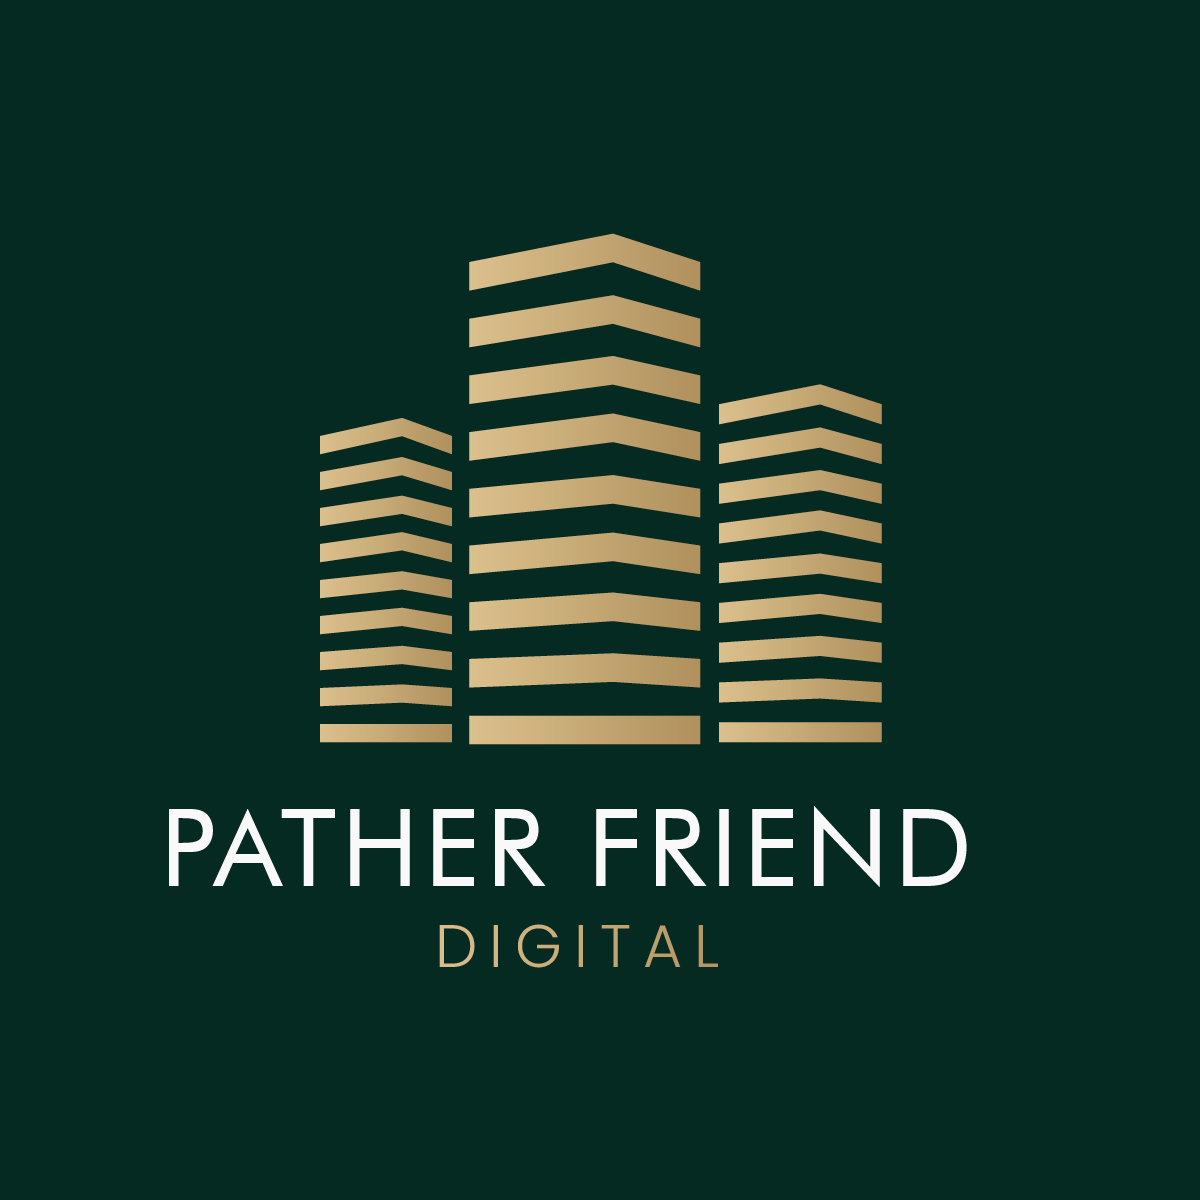 Pather Friend Digital